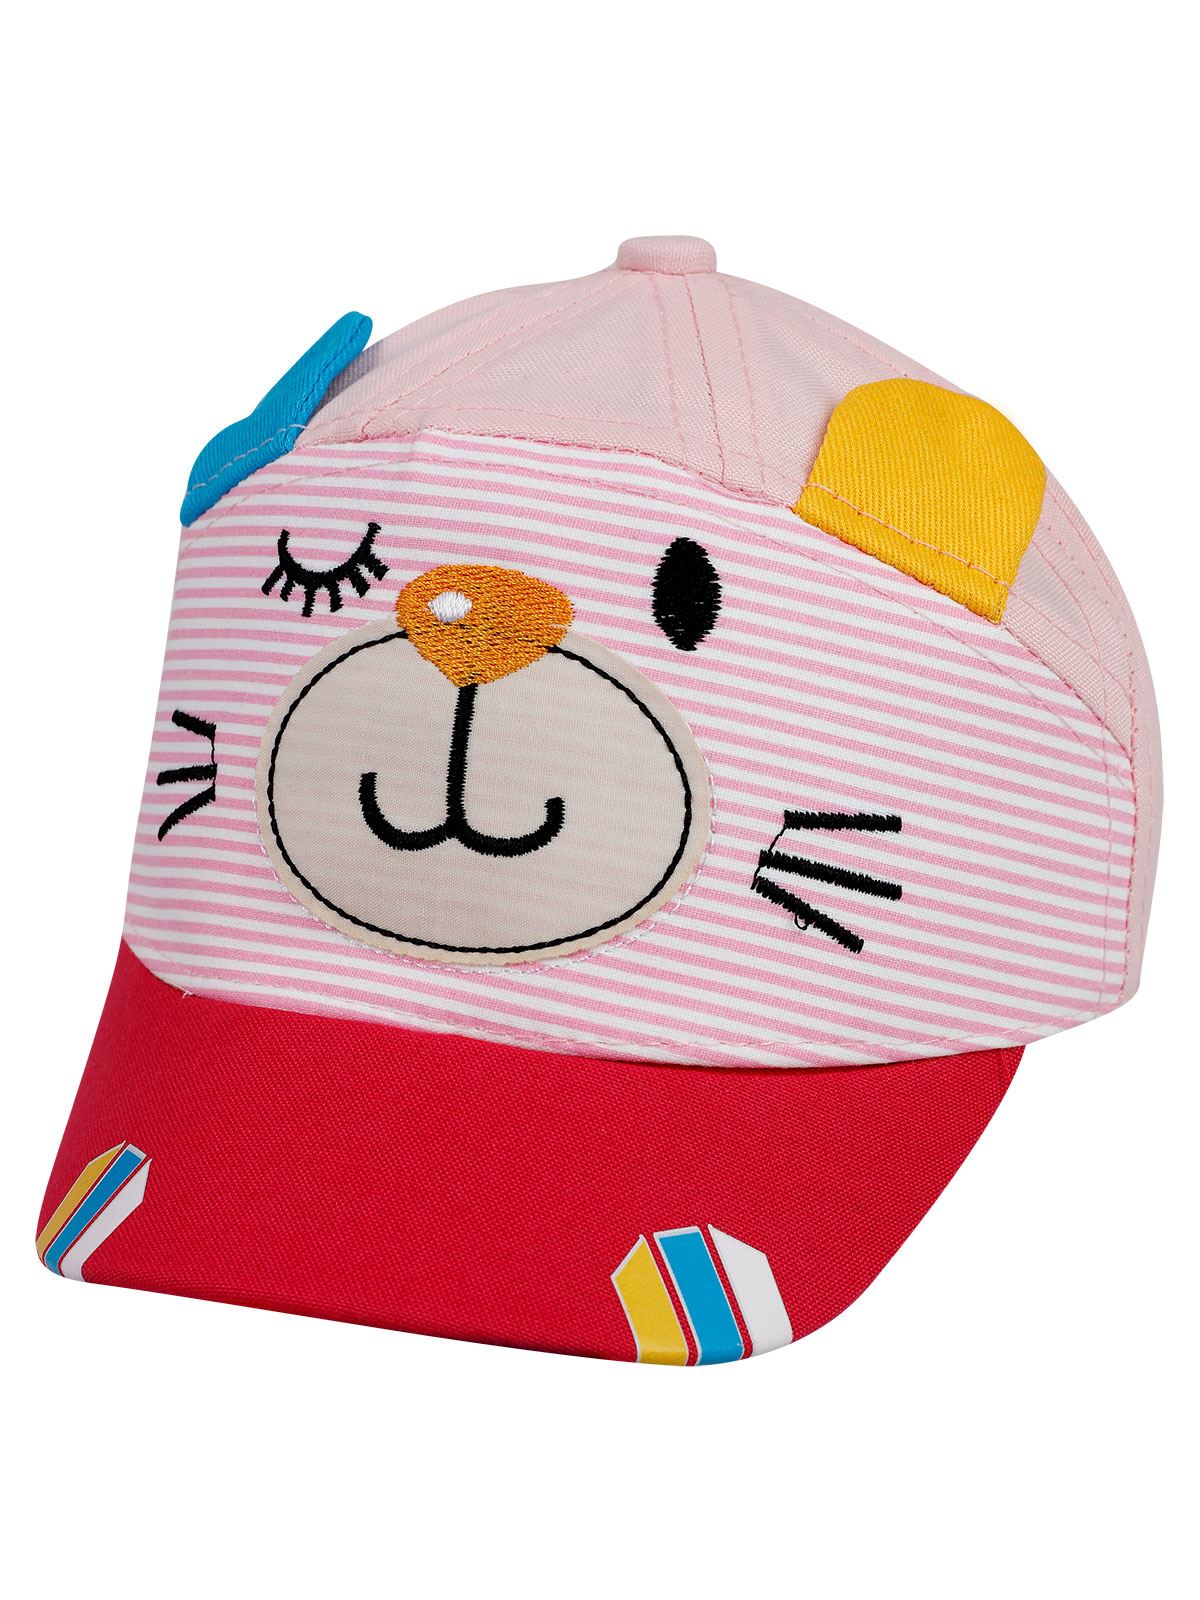 Civil Baby Kız Bebek Kep Şapka 0-24 Ay Pembe